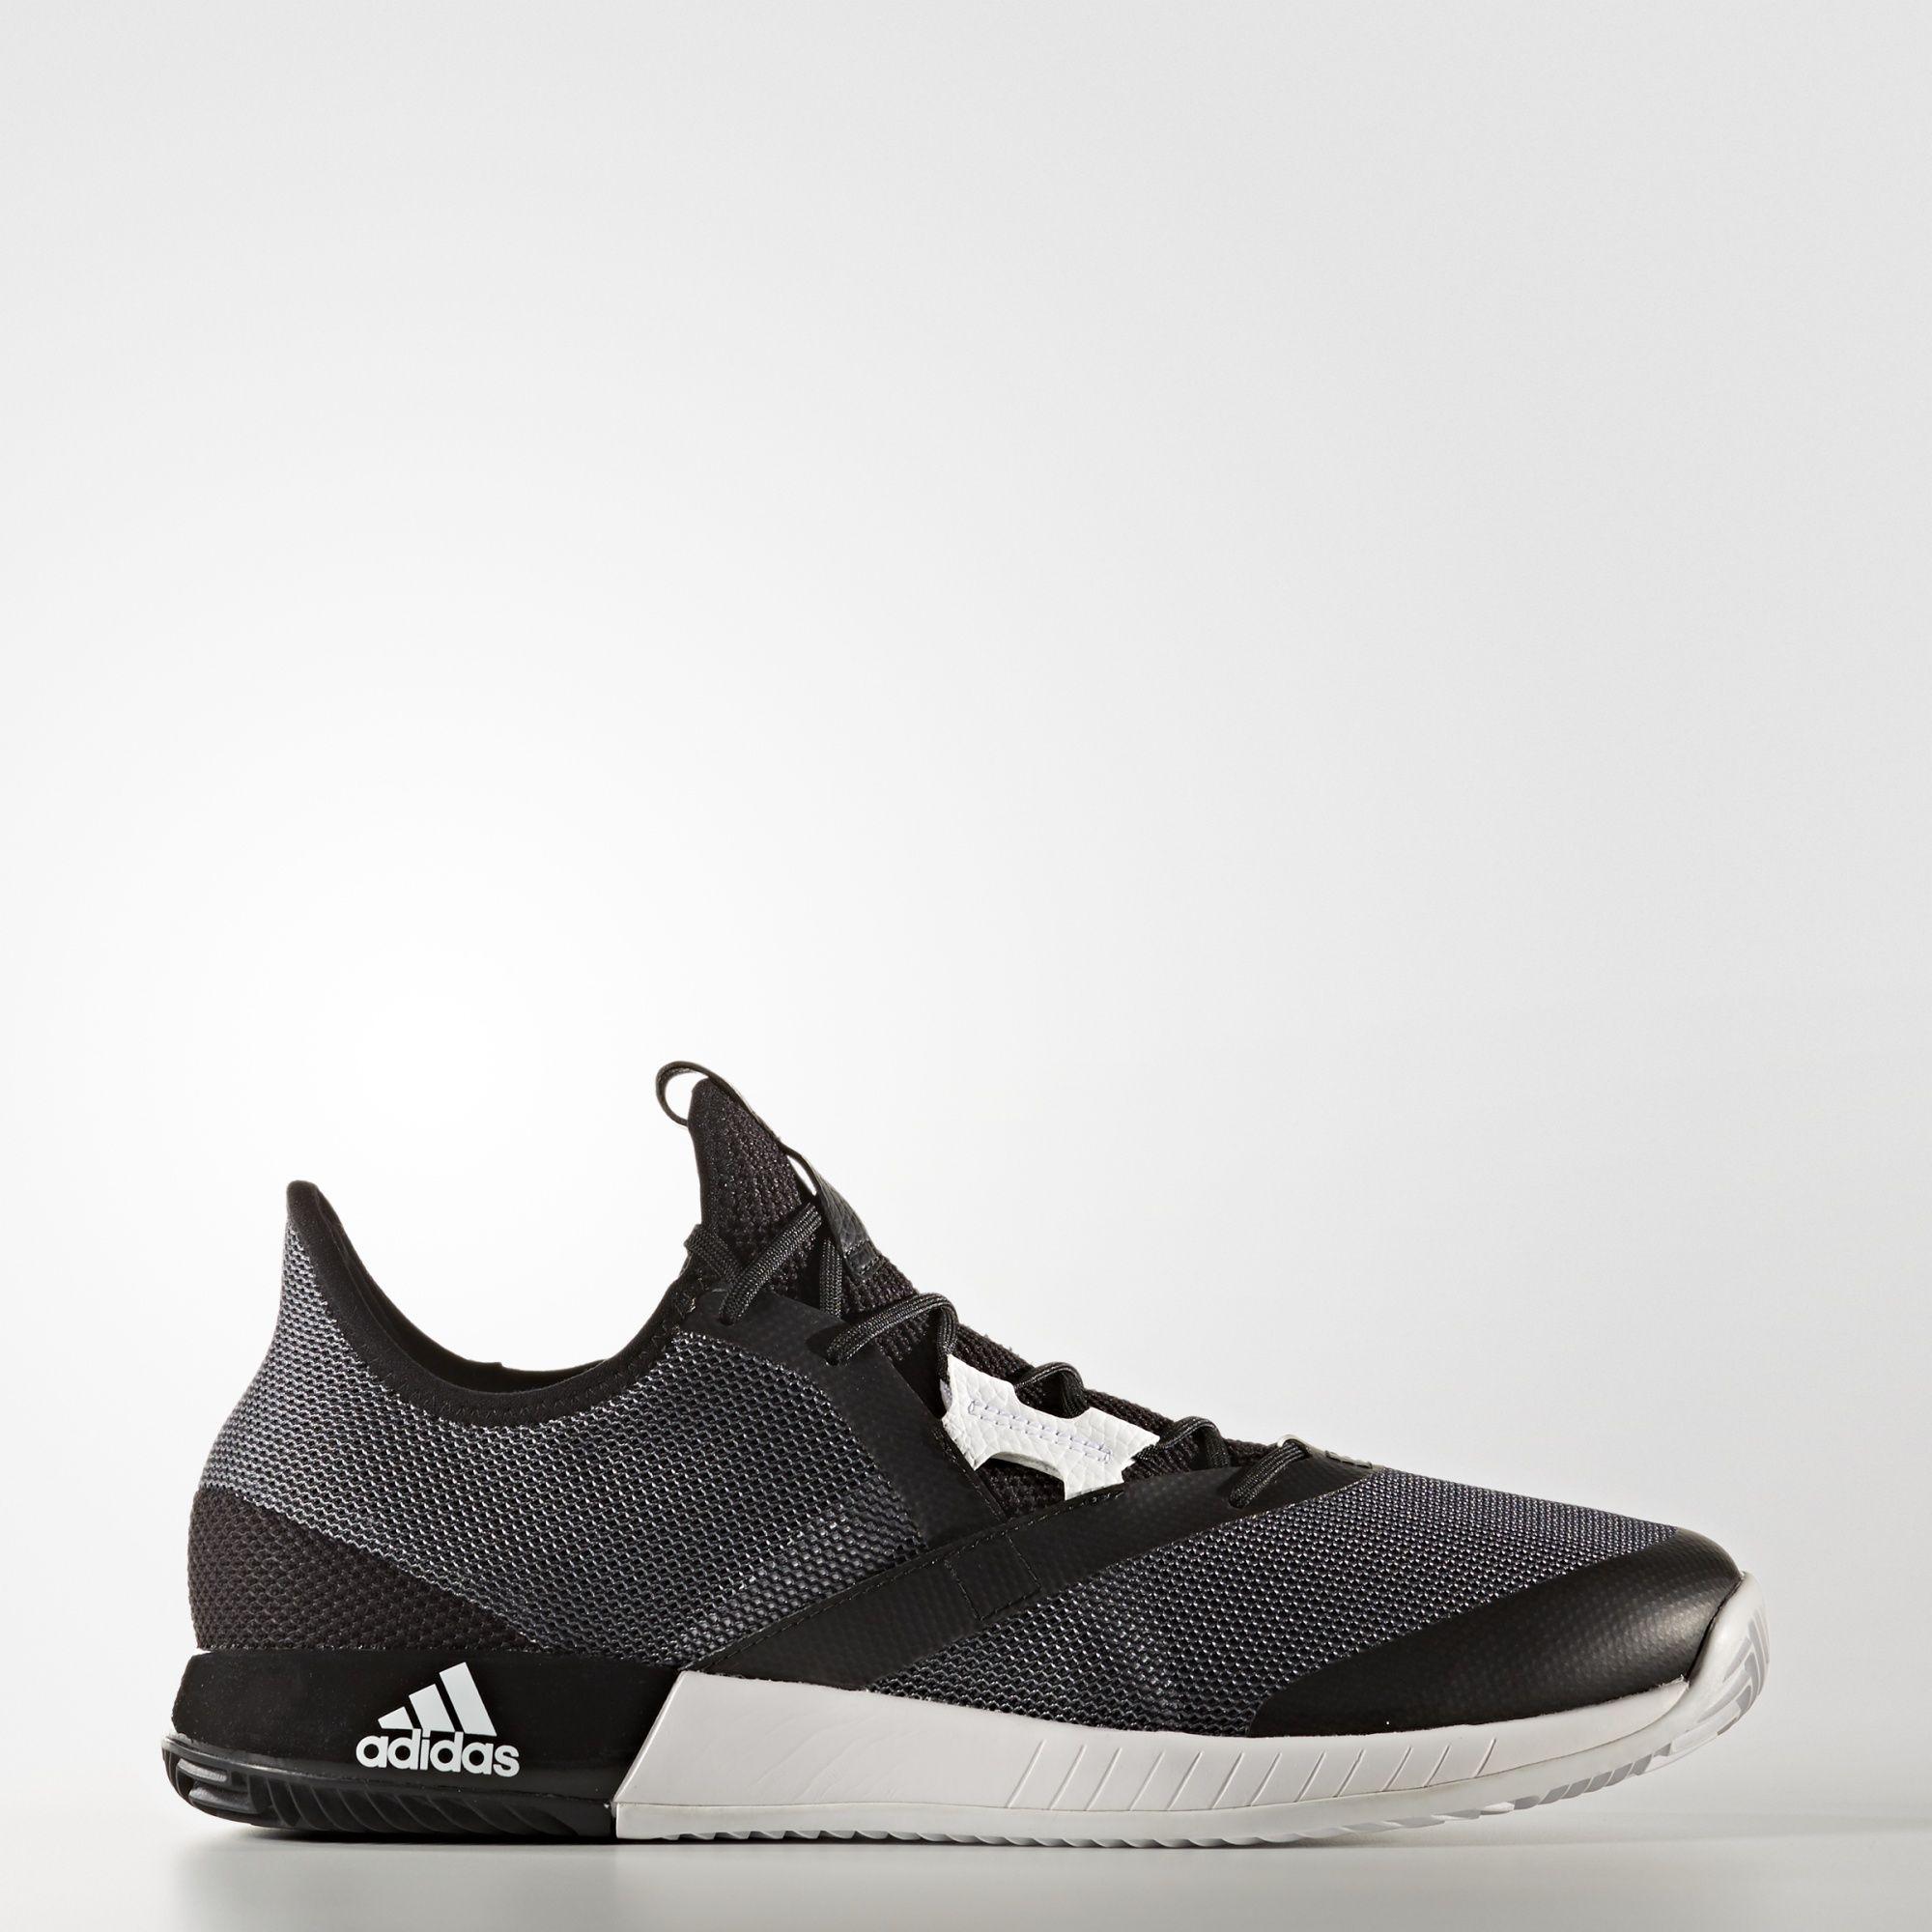 Adidas Mens Adizero Defiant Bounce Tennis Shoes - Black/Grey ...